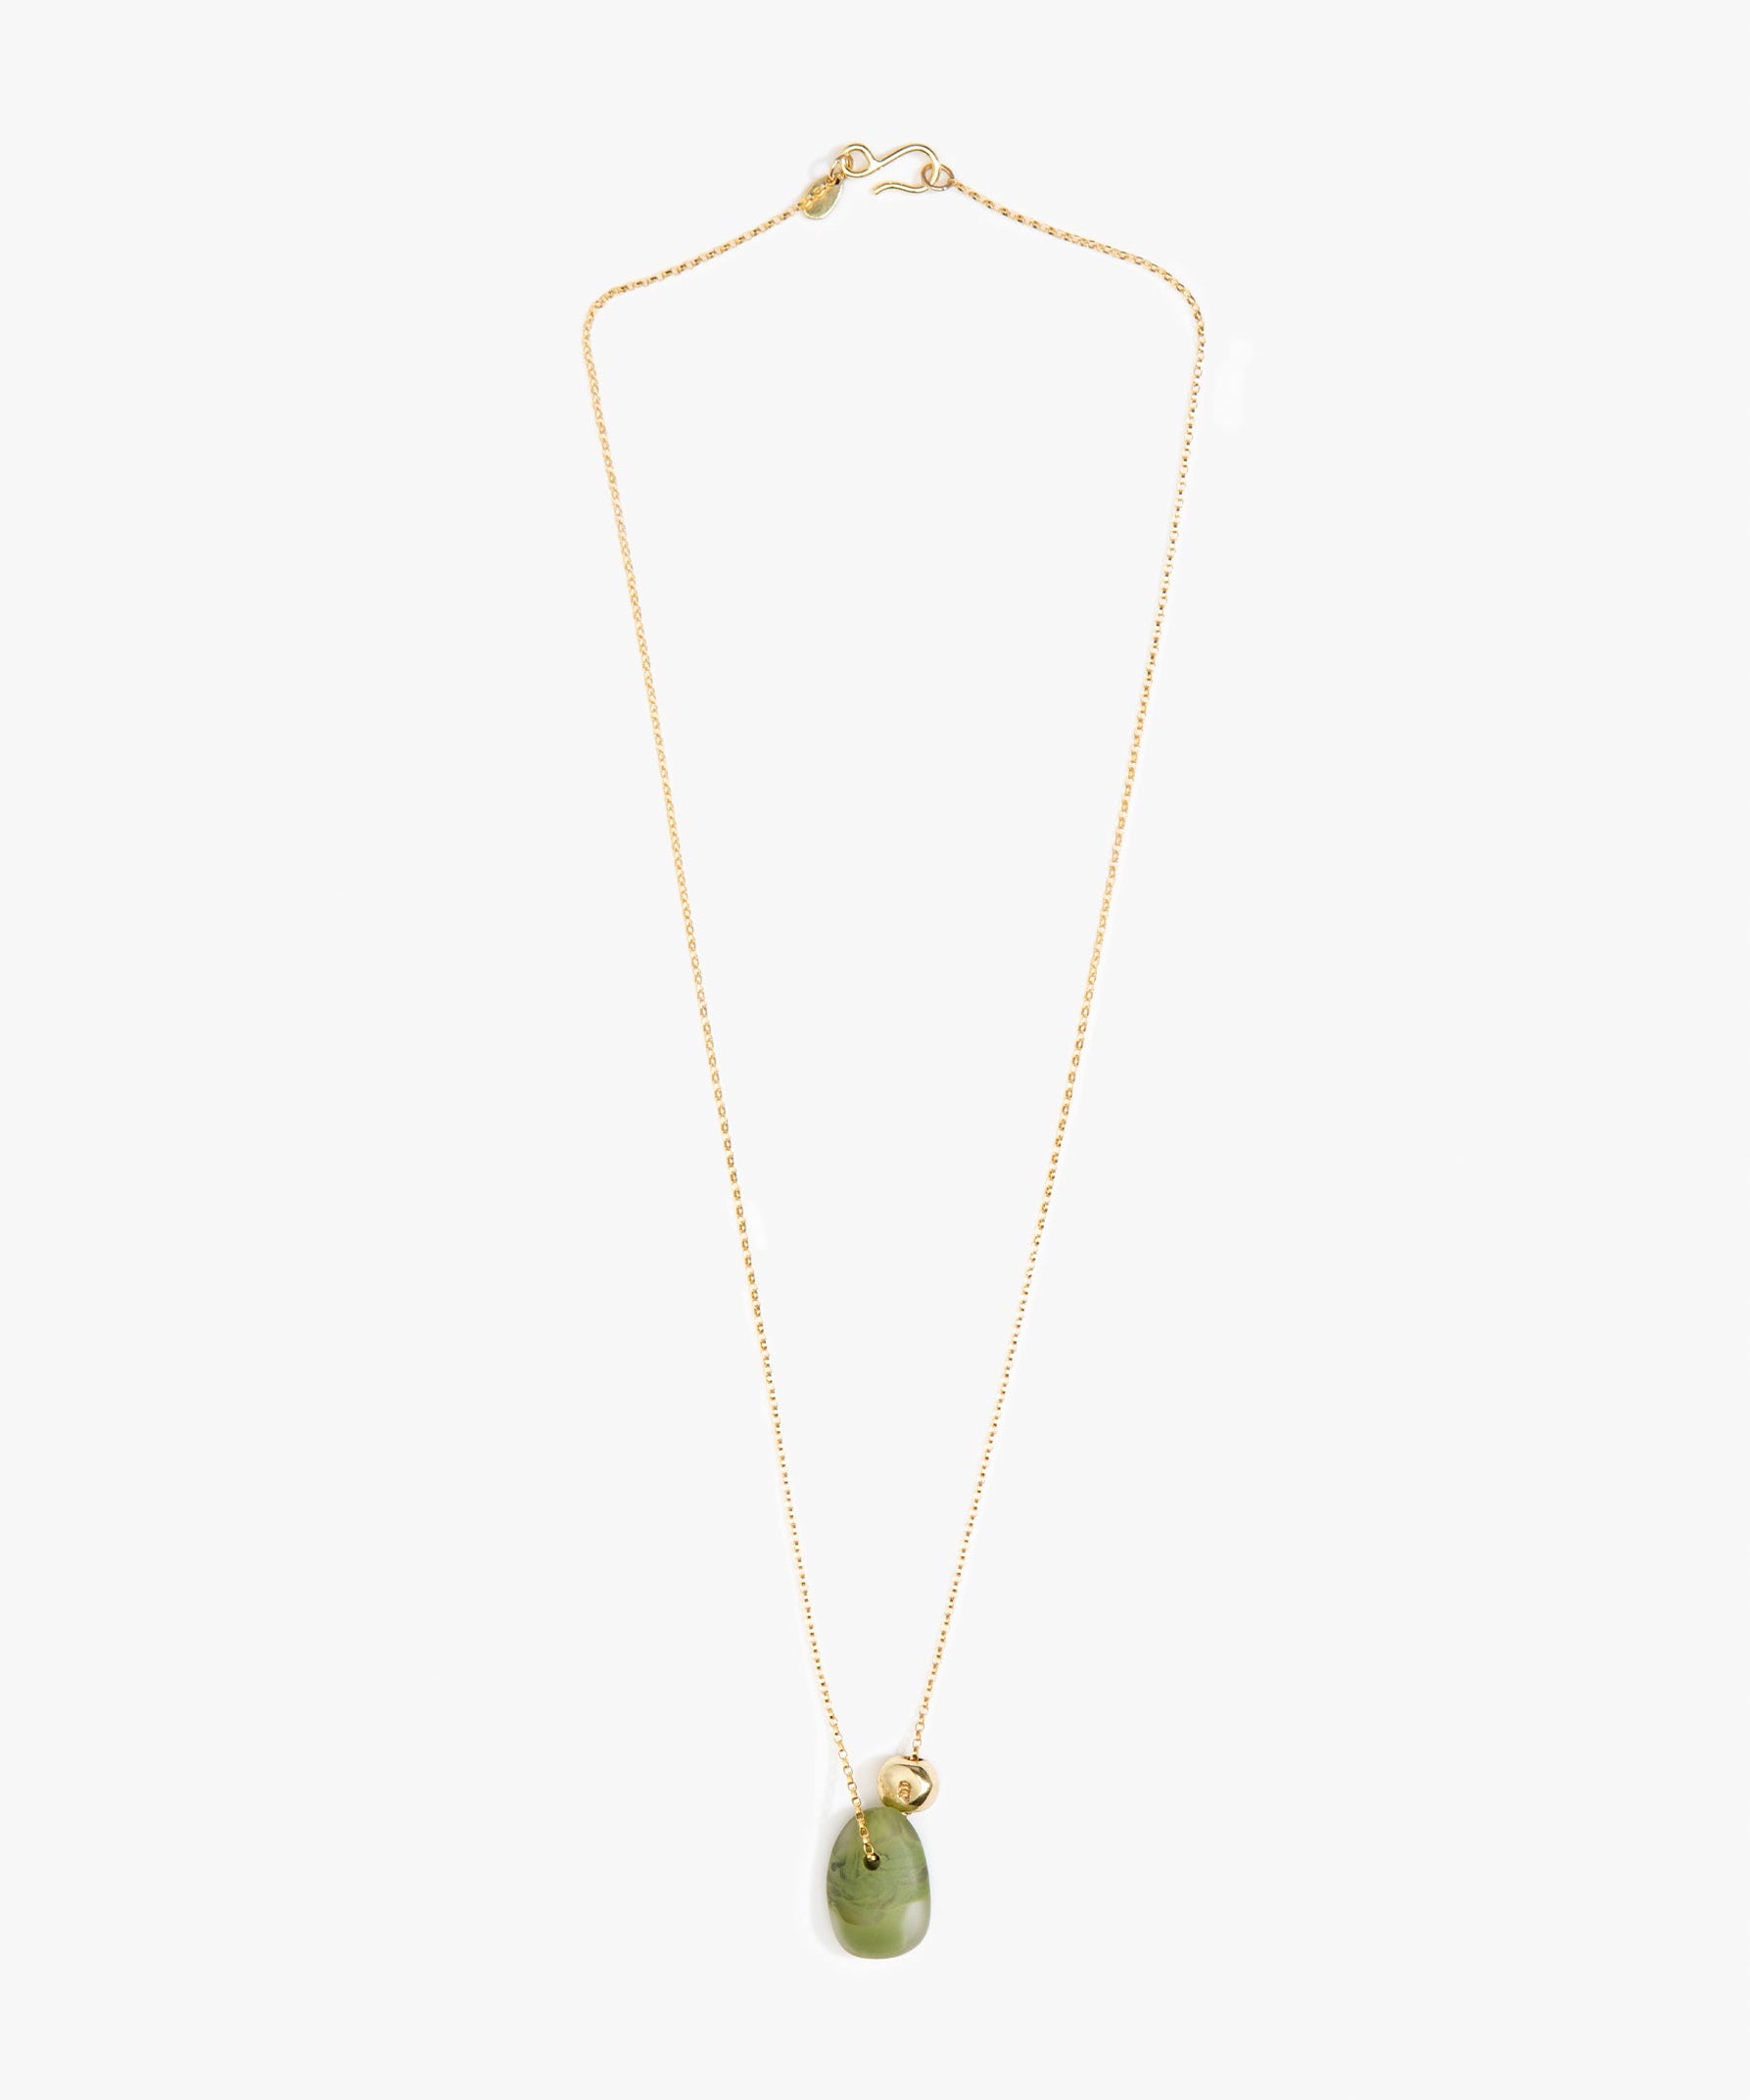 Dinosaur Designs Joie De Vivre Pendant Necklaces in Olive Colour resin with Gold-Filled Material